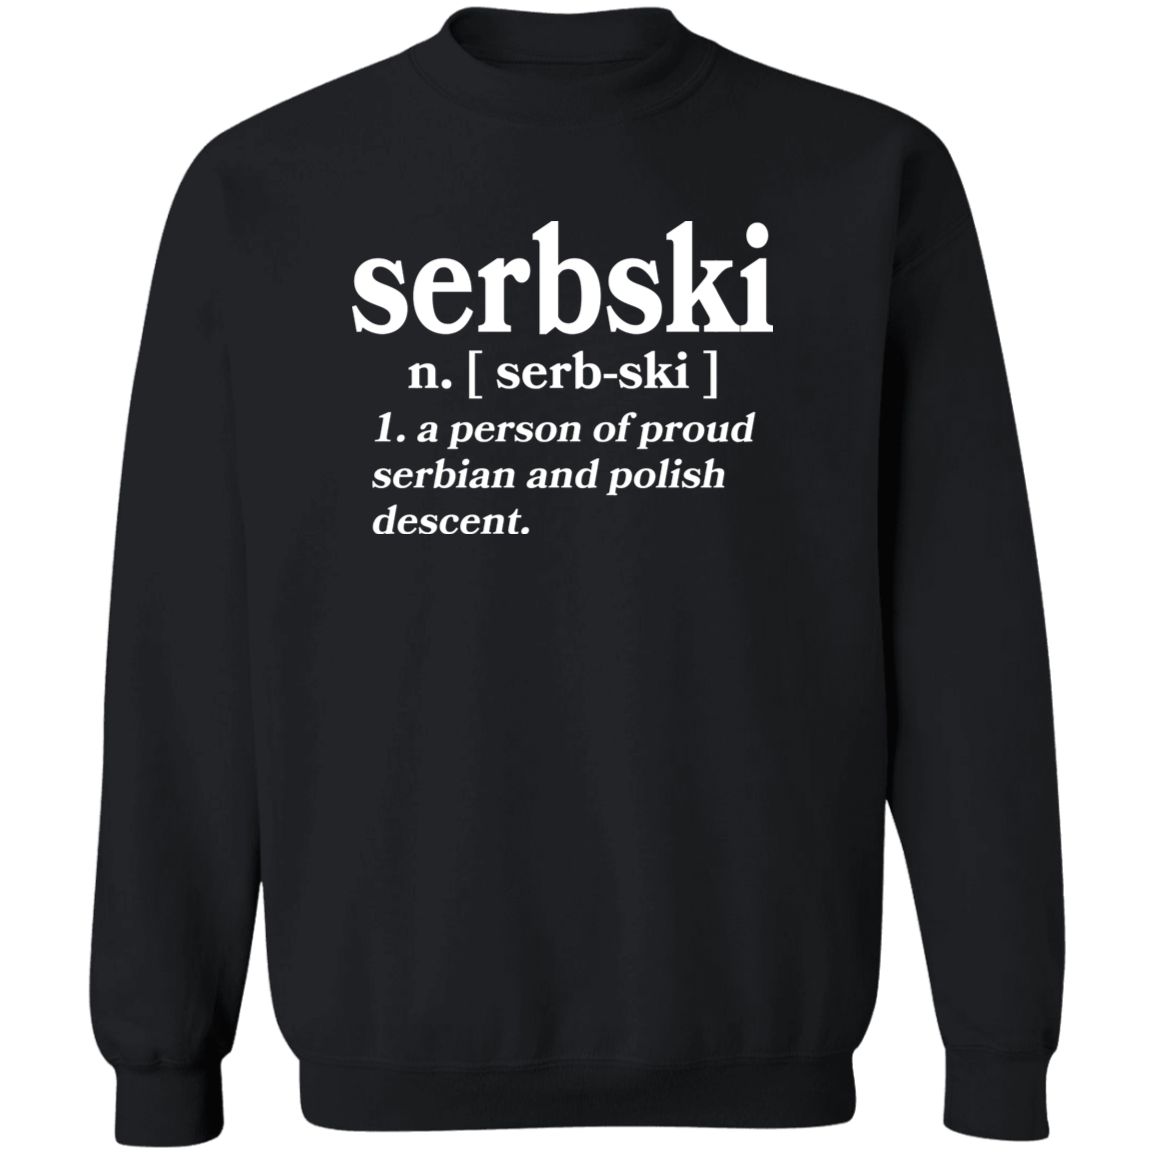 Serbski A Person Of Serbian and Polish Descent Apparel CustomCat G180 Crewneck Pullover Sweatshirt Black S